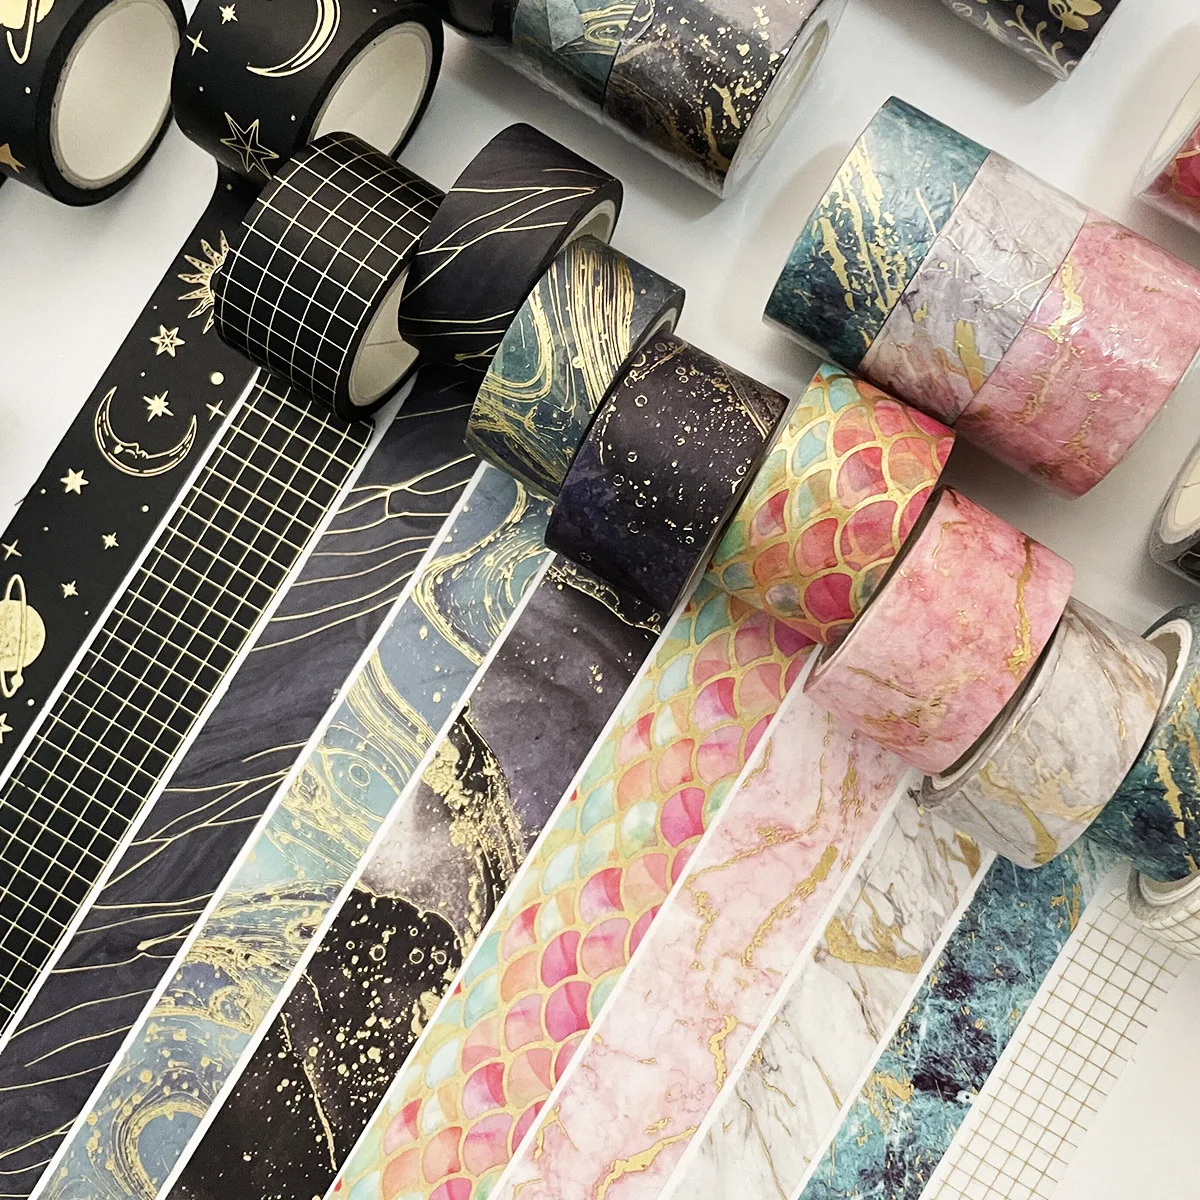 9 Rolls Fresh Floral Pattern Washi Tape Decorative Scrapbooking Tapes DIY  Washi Tapes 